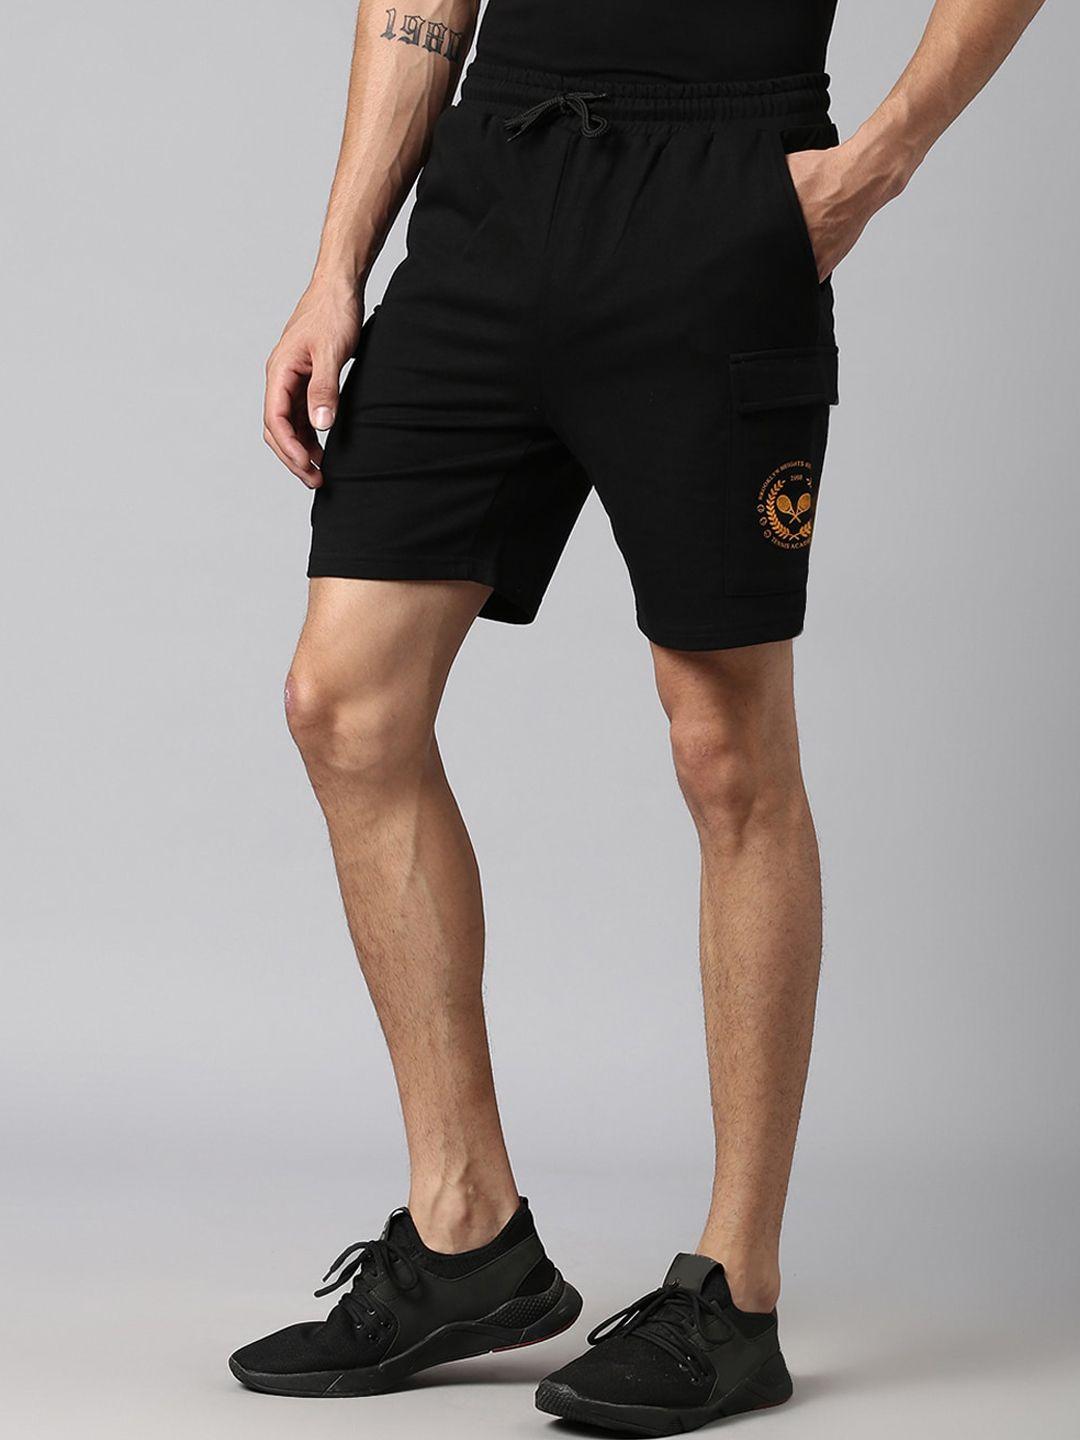 hubberholme-men-graphic-printed-regular-shorts